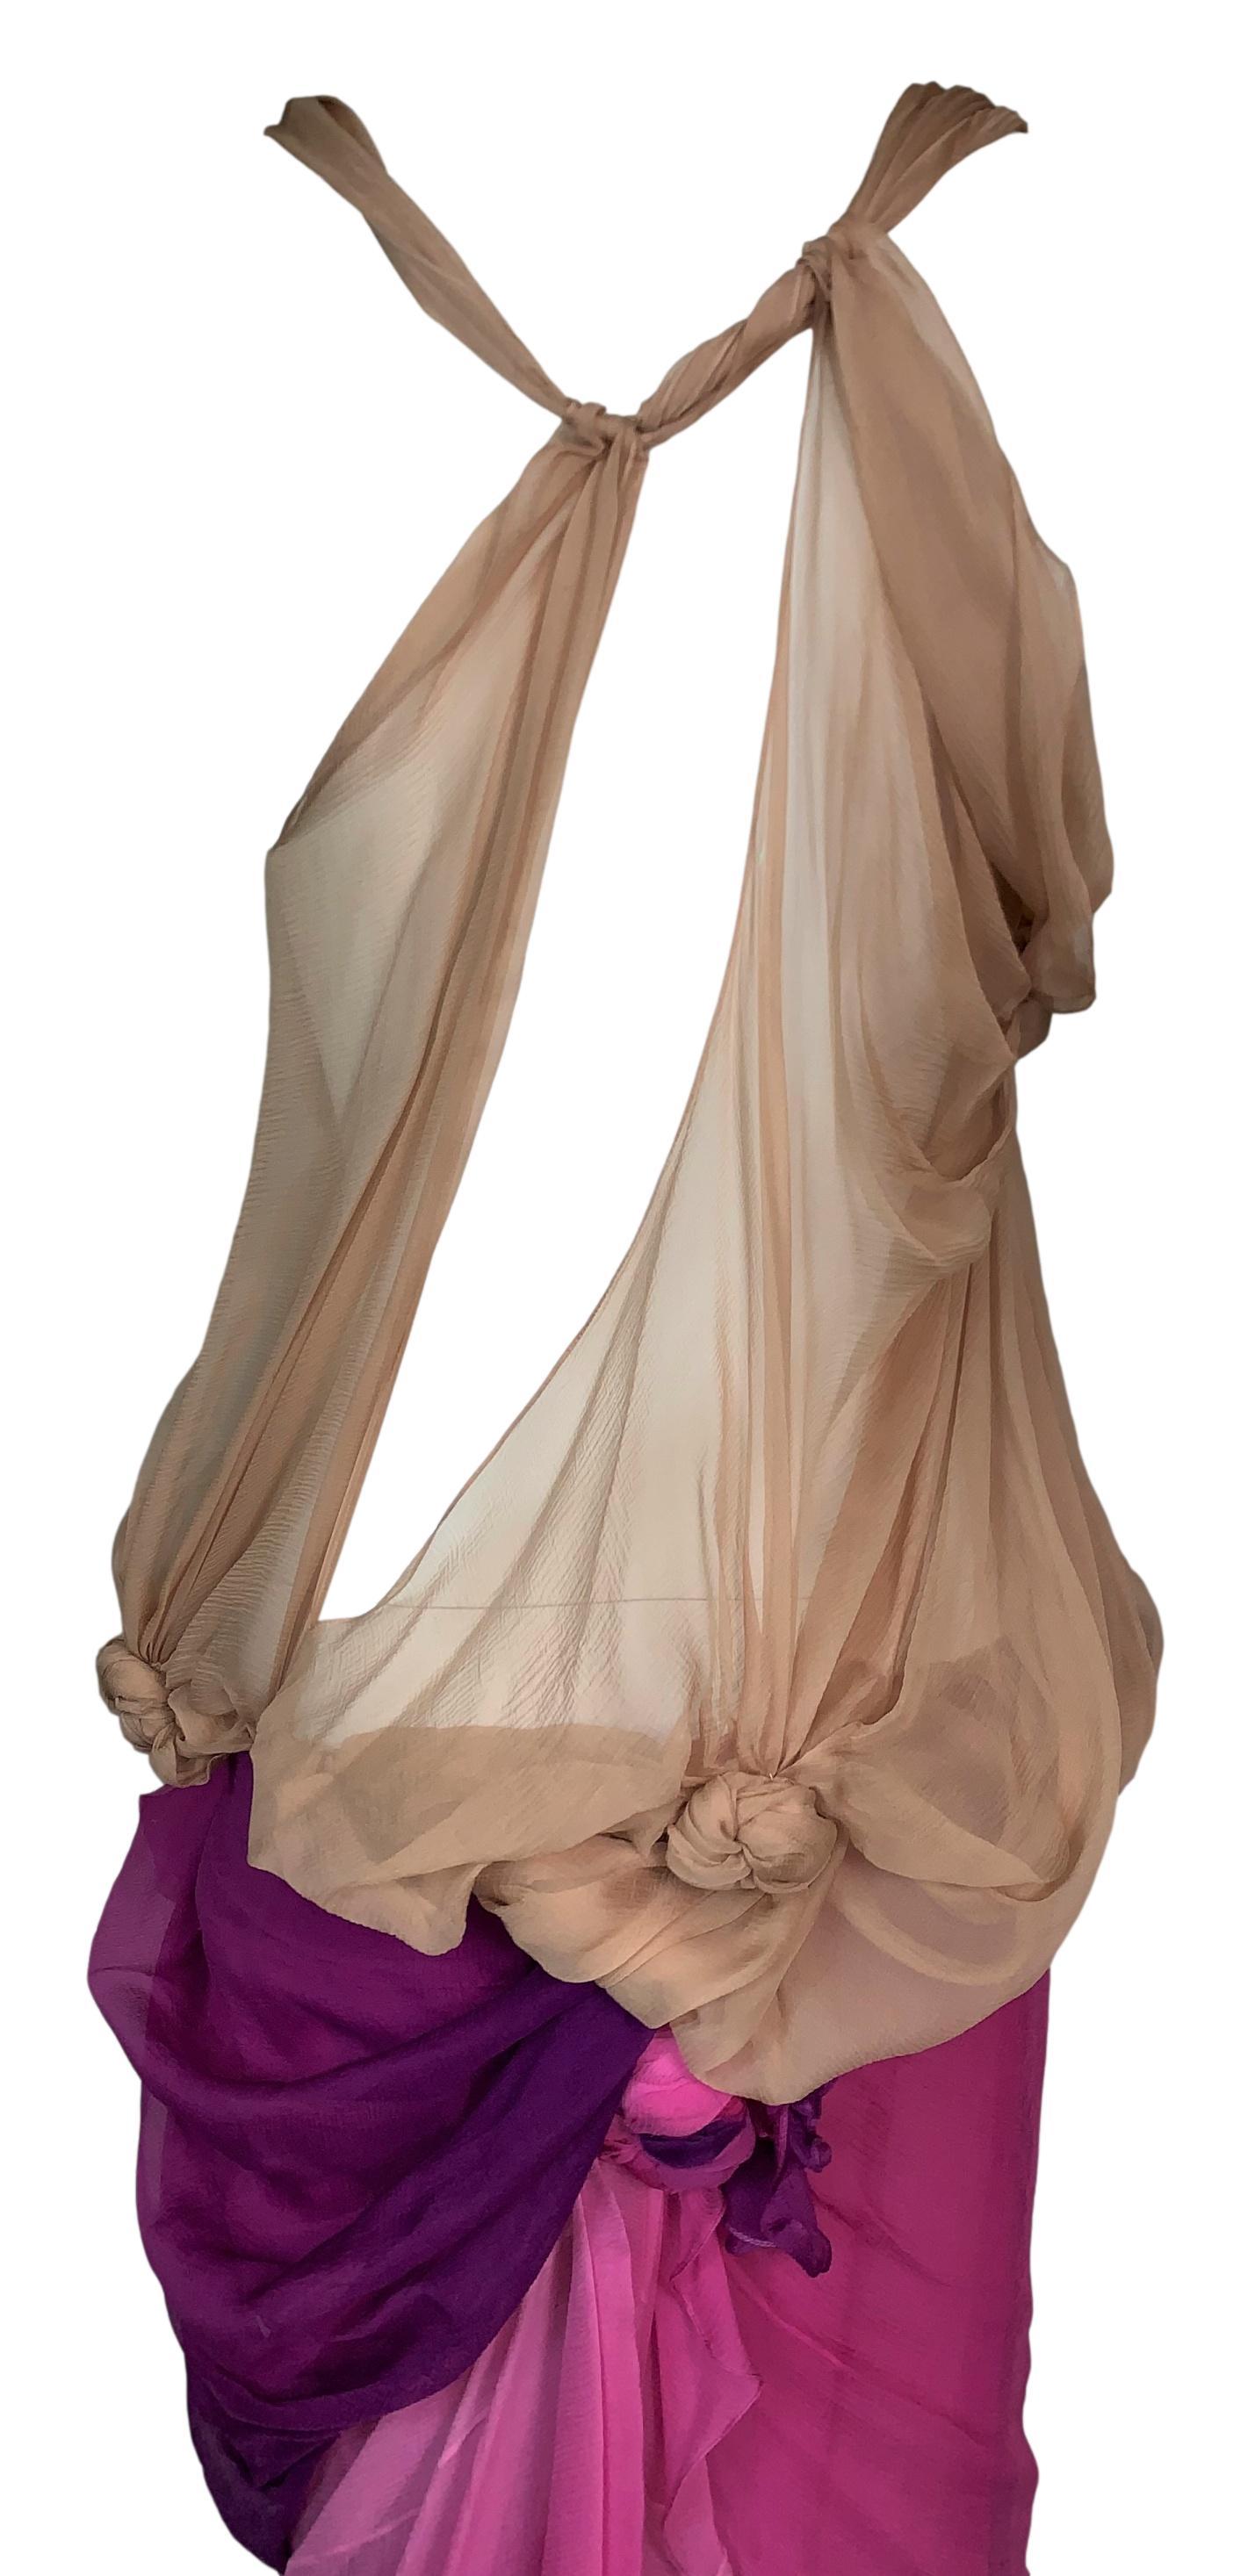 S/S 2006 Christian Dior John Galliano Runway Sheer Nude Pink Silk Gown Dress In Good Condition In Yukon, OK